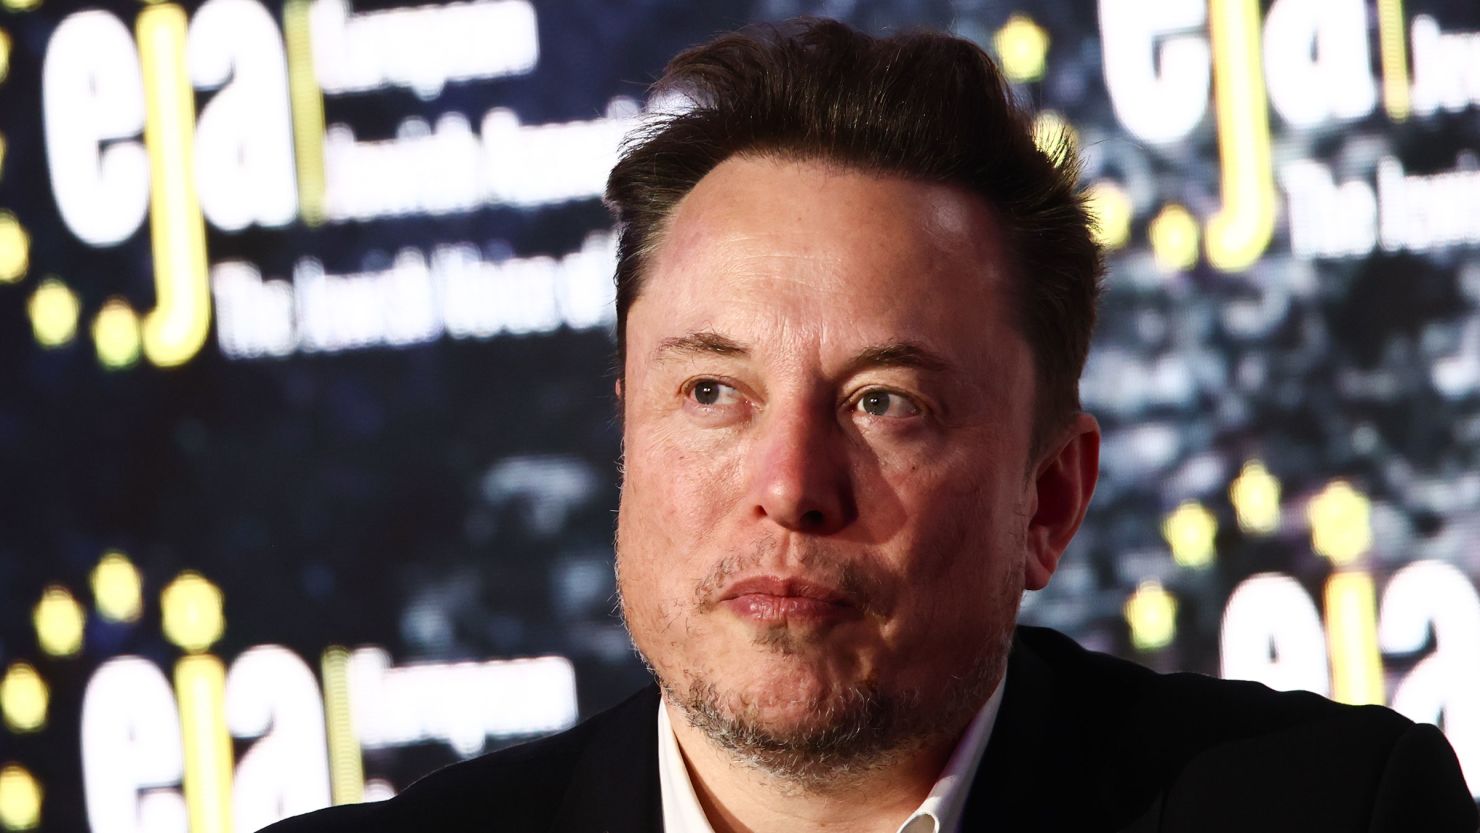 Elon Musk Tesla pay package court ruling highights